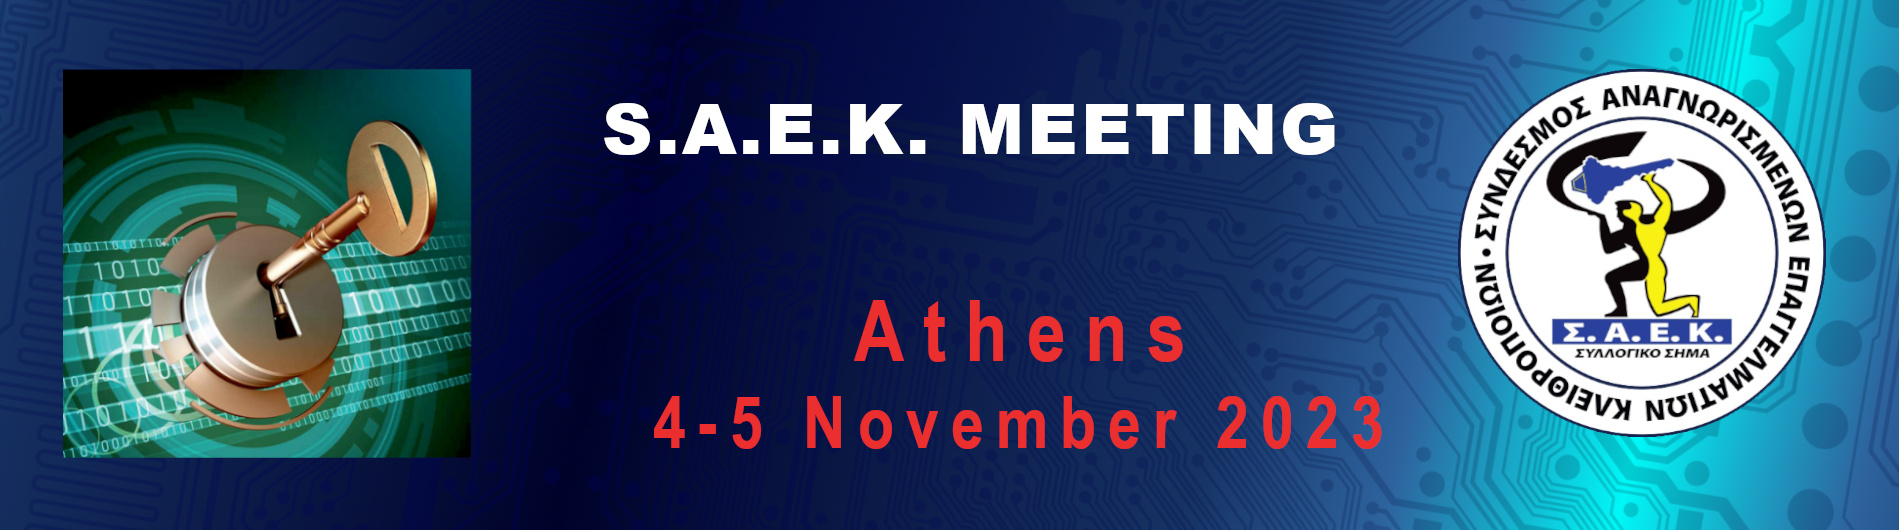 S.A.E.K Meeting 2023 - (Athens 4-5 November 2023)